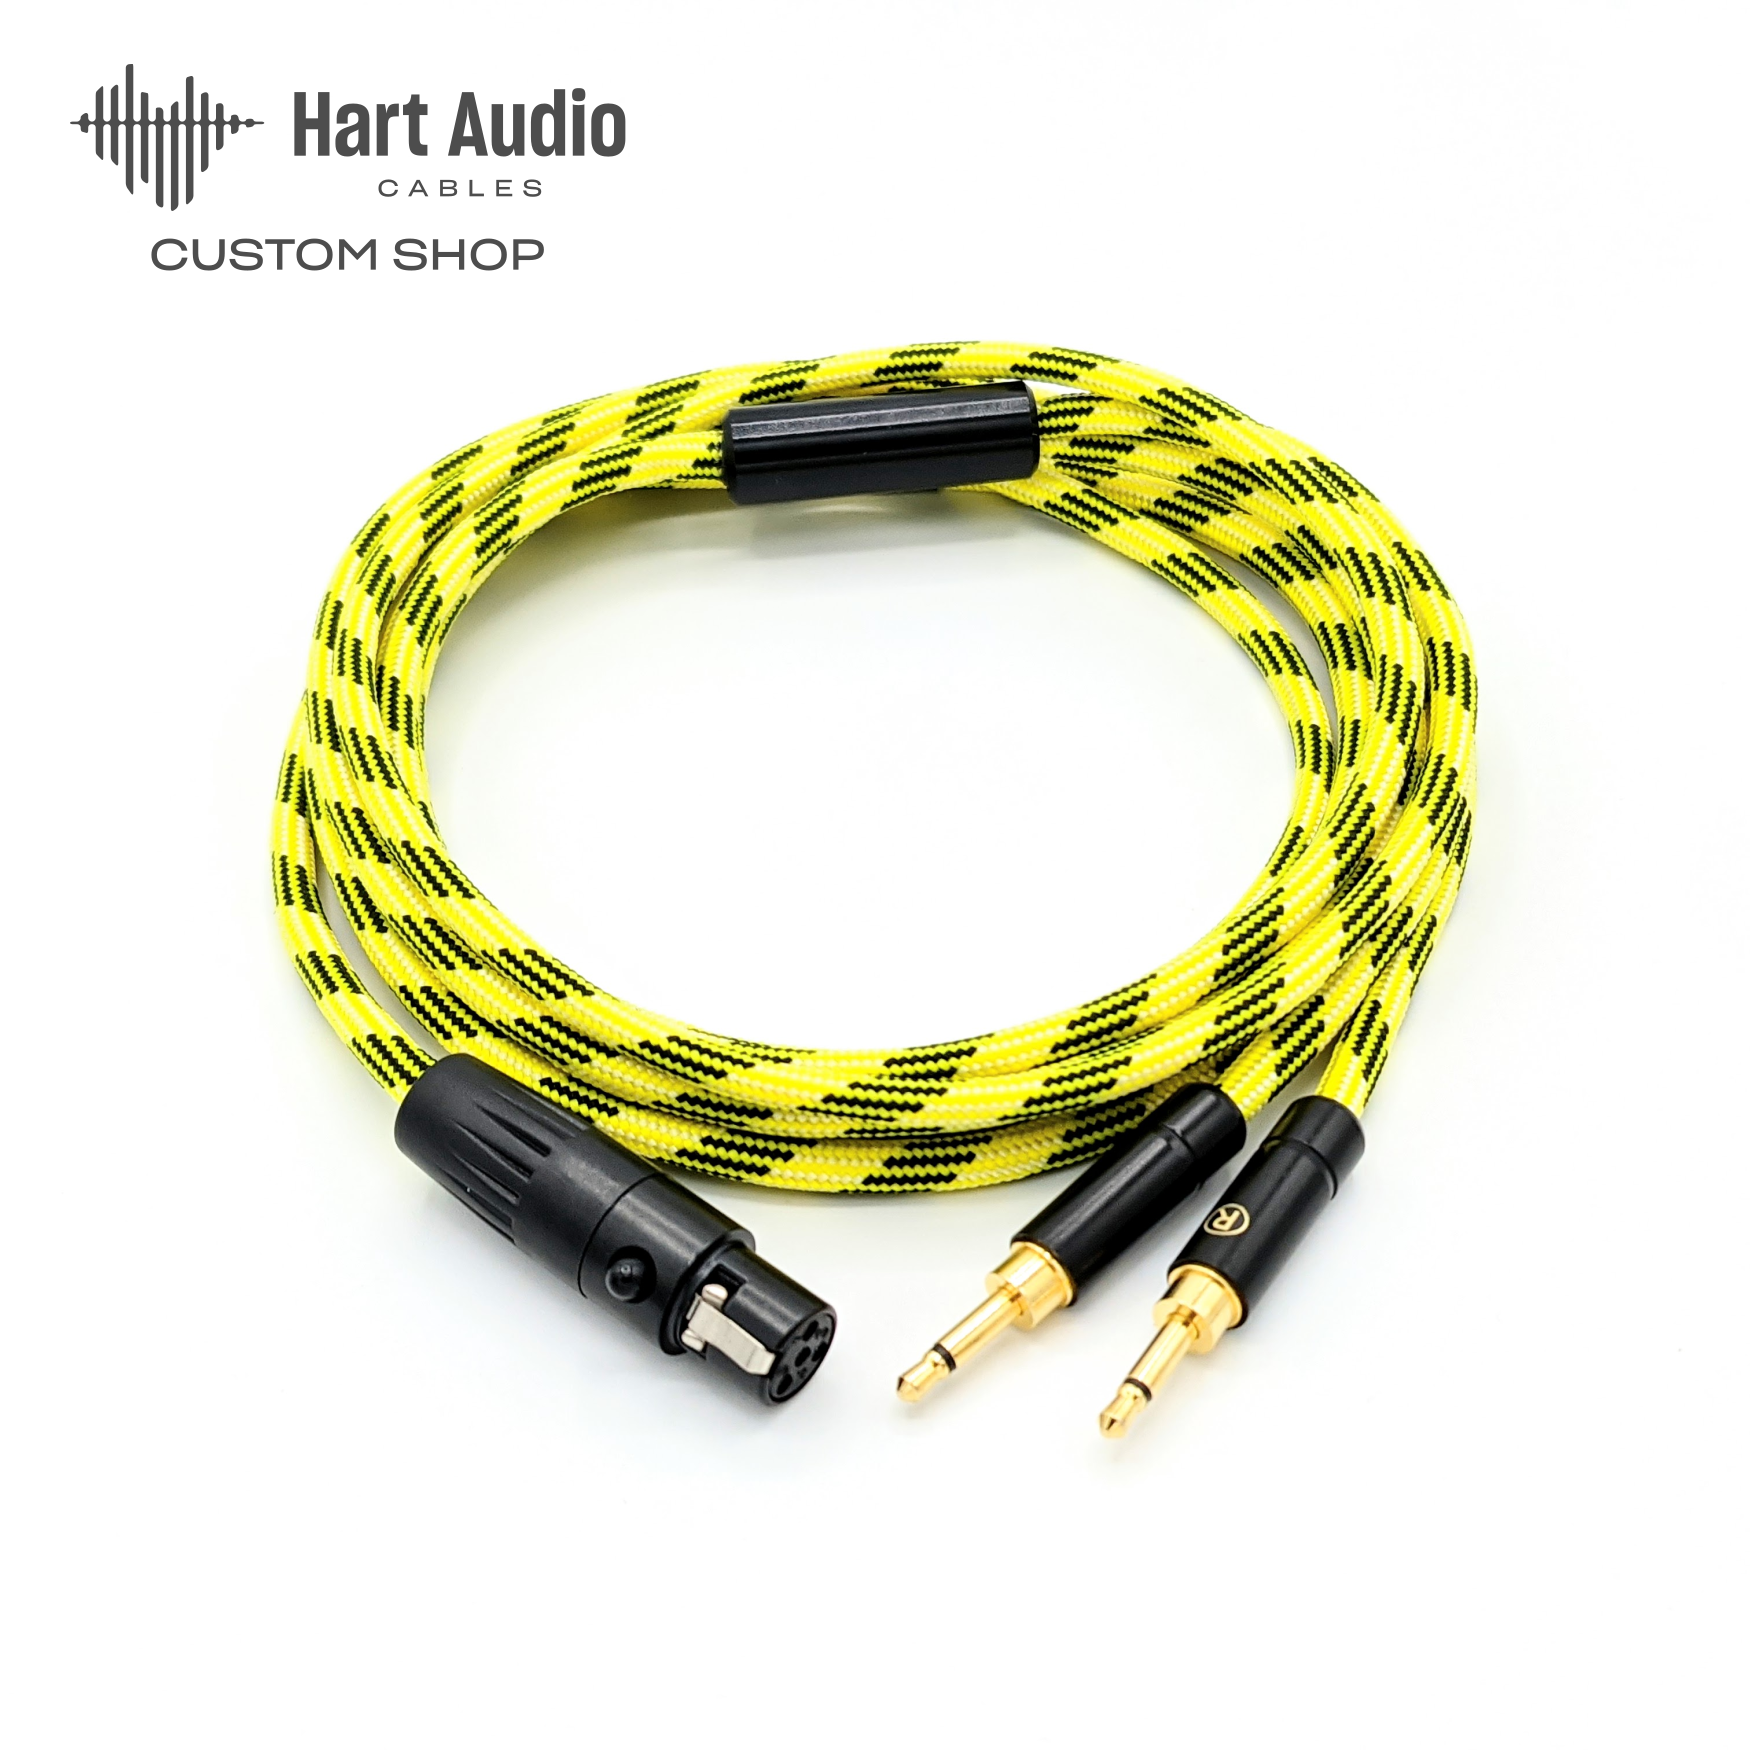 RPL-HC-9: Dual 3.5mm Cable for Hifiman, Focal, Meze 109 / Liric headhones + more